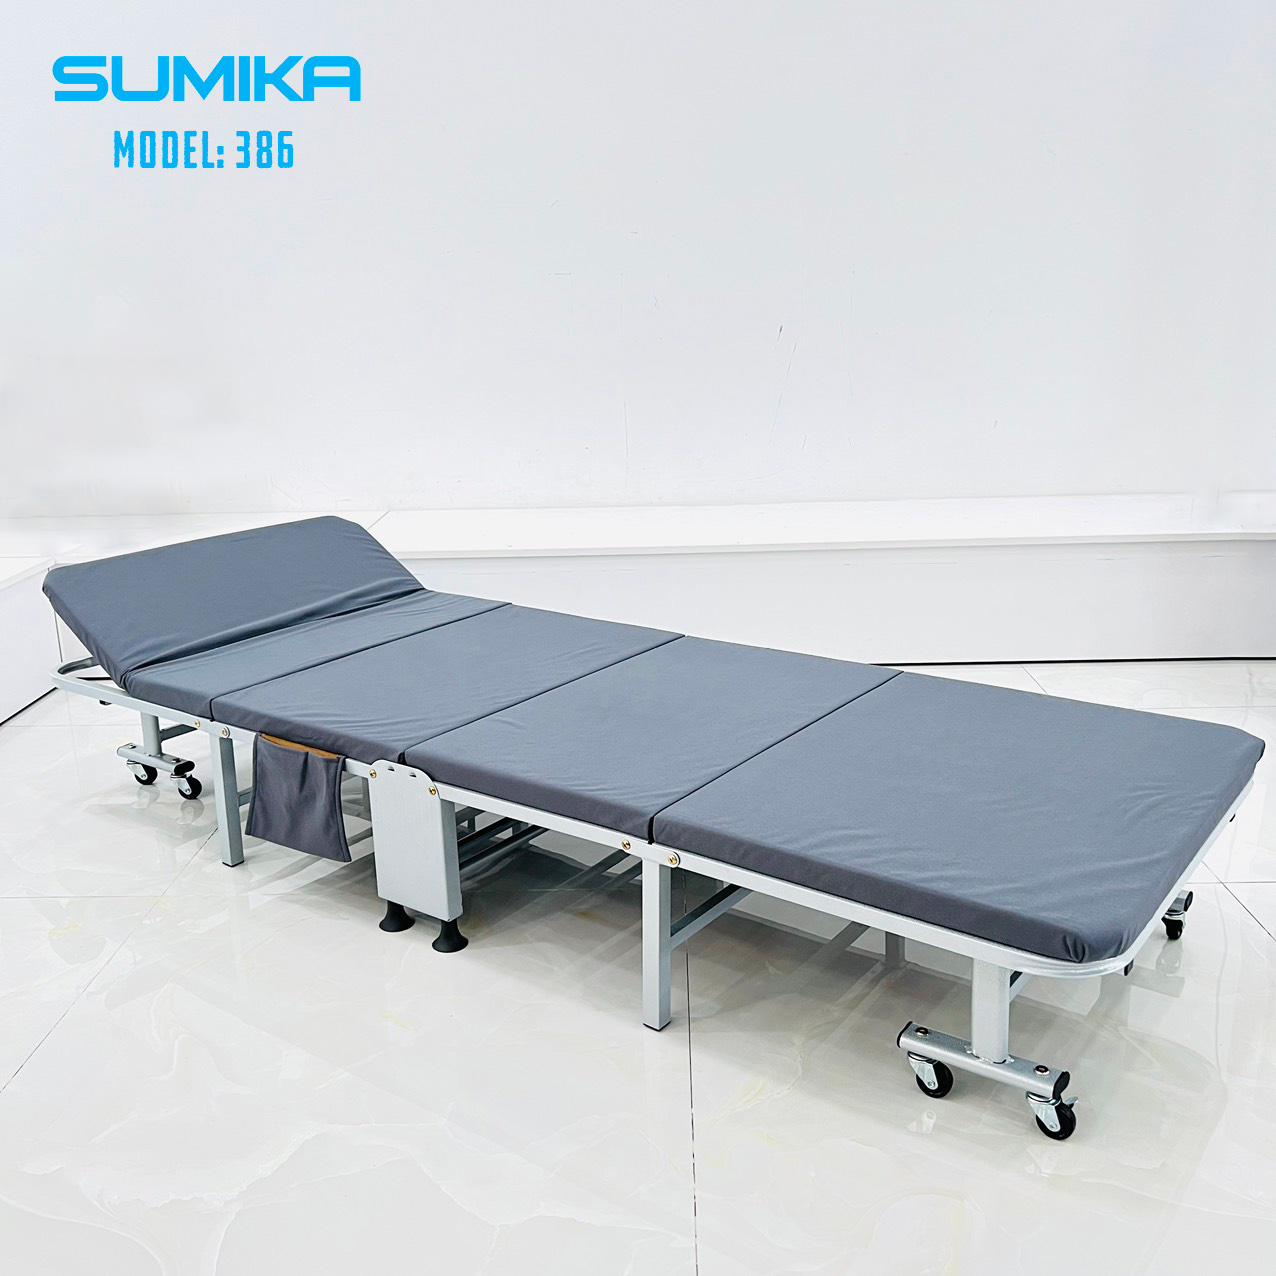 Sumika mobile folding bed 386